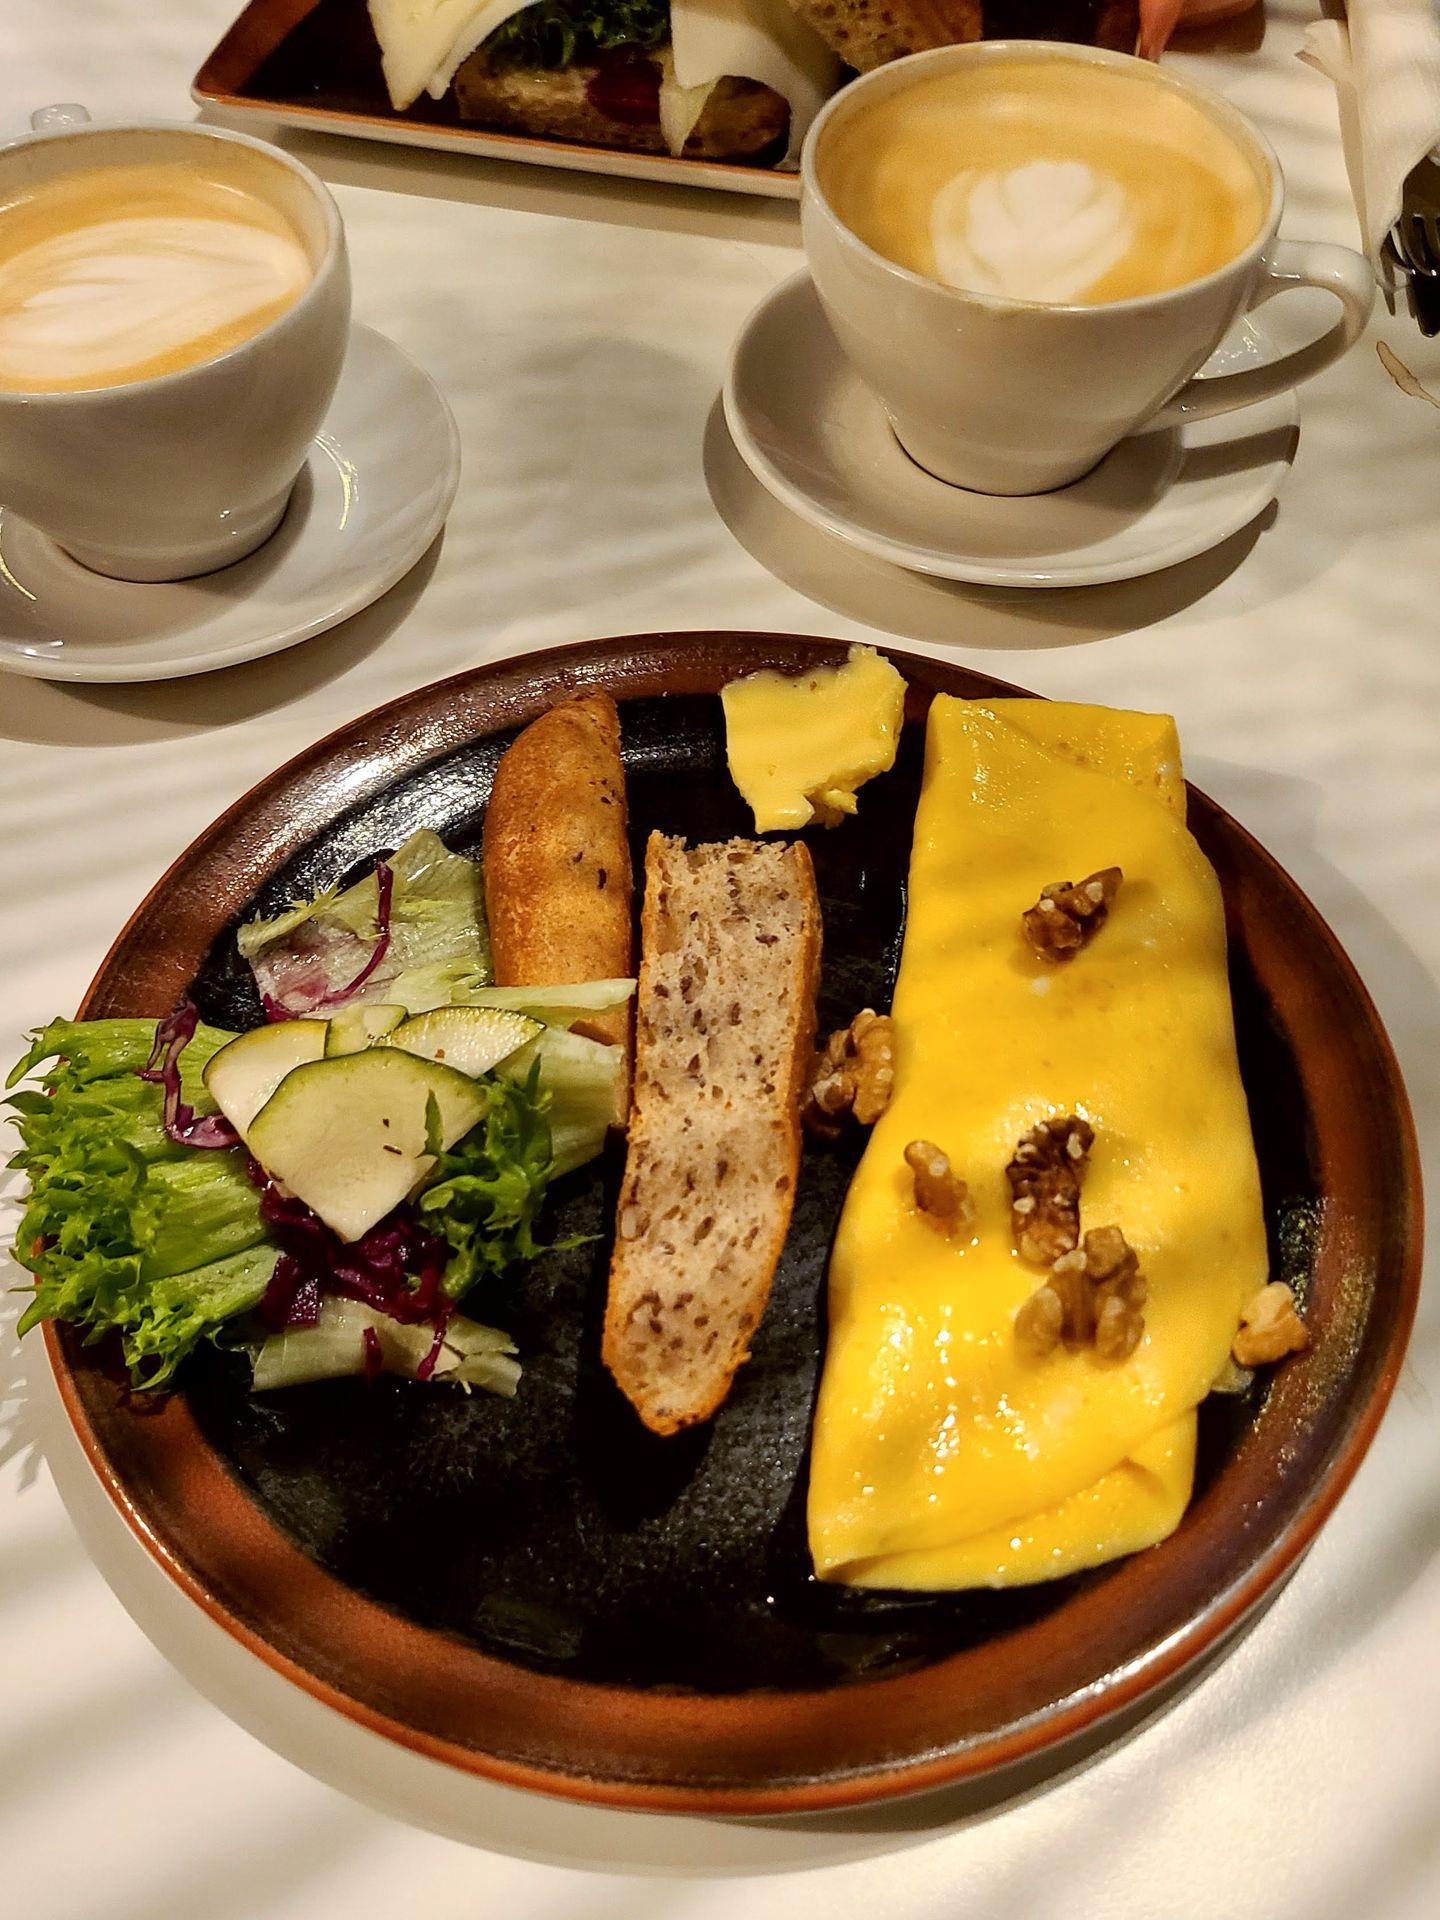 An omelette served with bread and salad from Risø mat og kaffebar